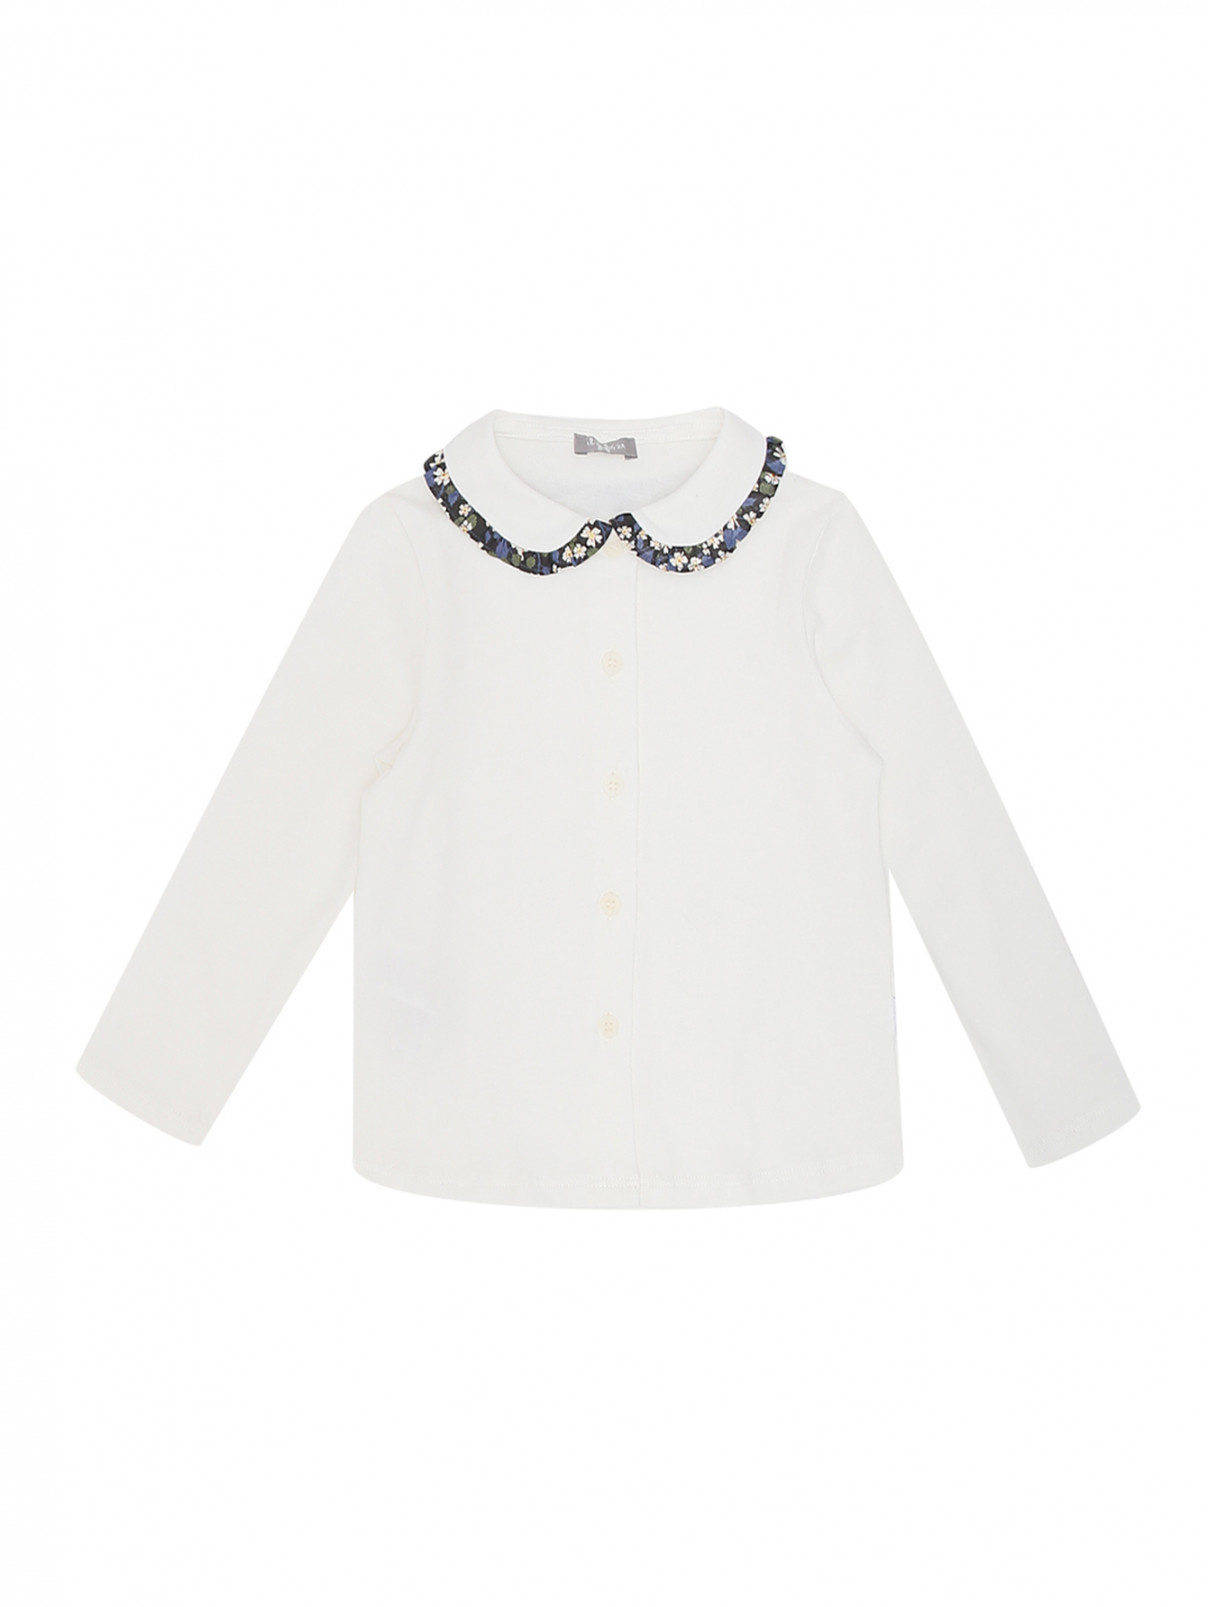 Блуза из трикотажа с воротником Il Gufo  –  Общий вид  – Цвет:  Белый